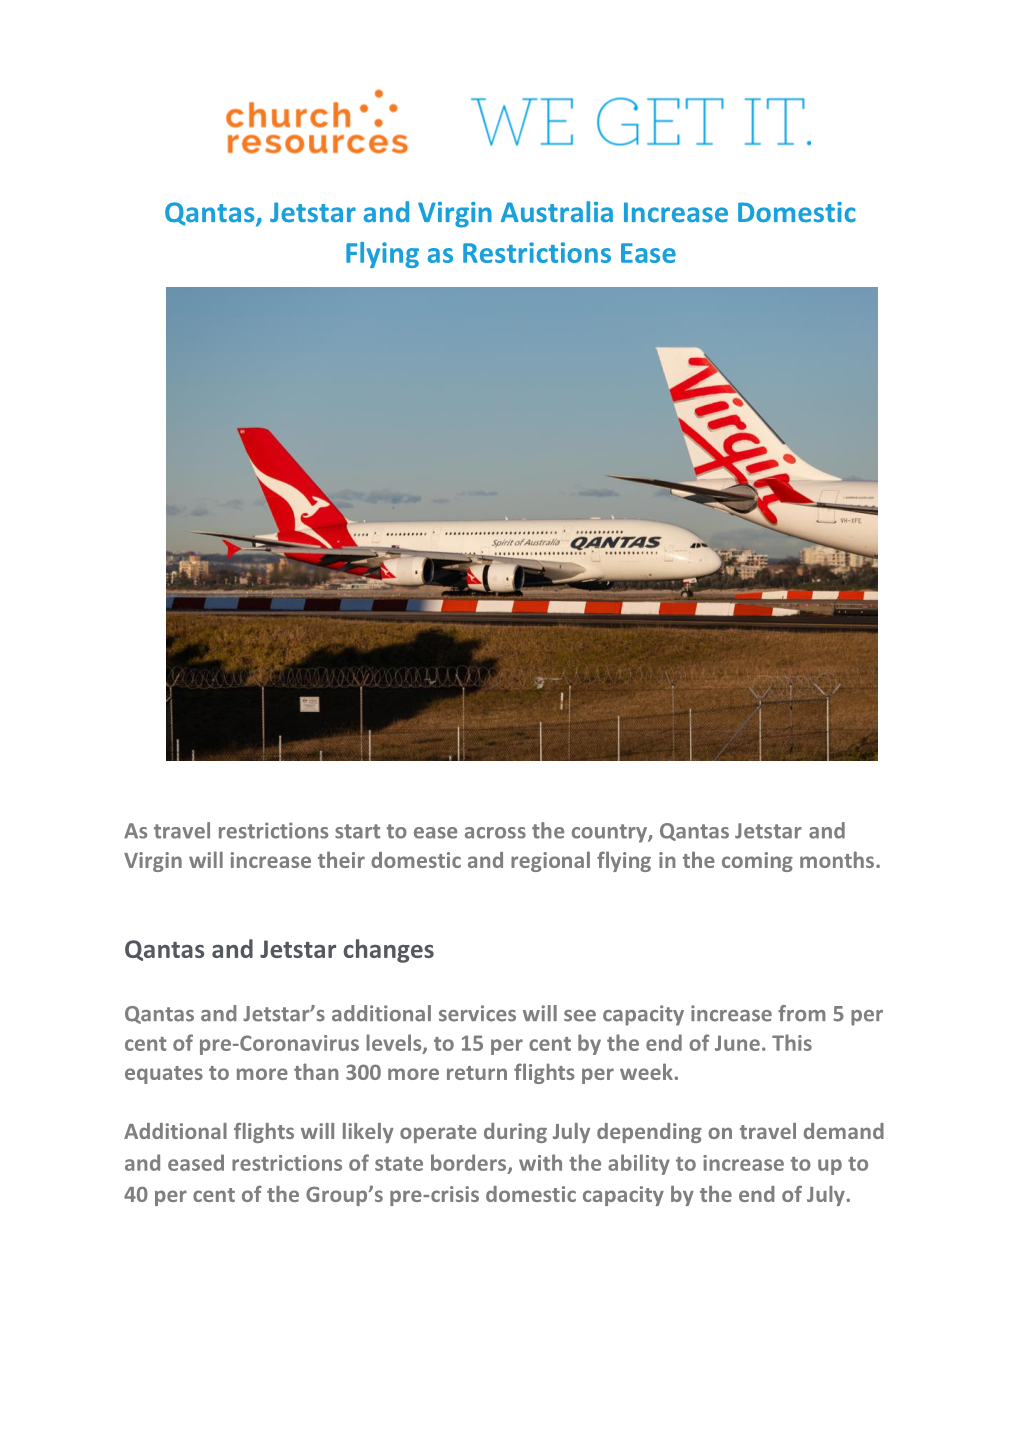 Qantas, Jetstar and Virgin Australia Increase Domestic Flying As Restrictions Ease